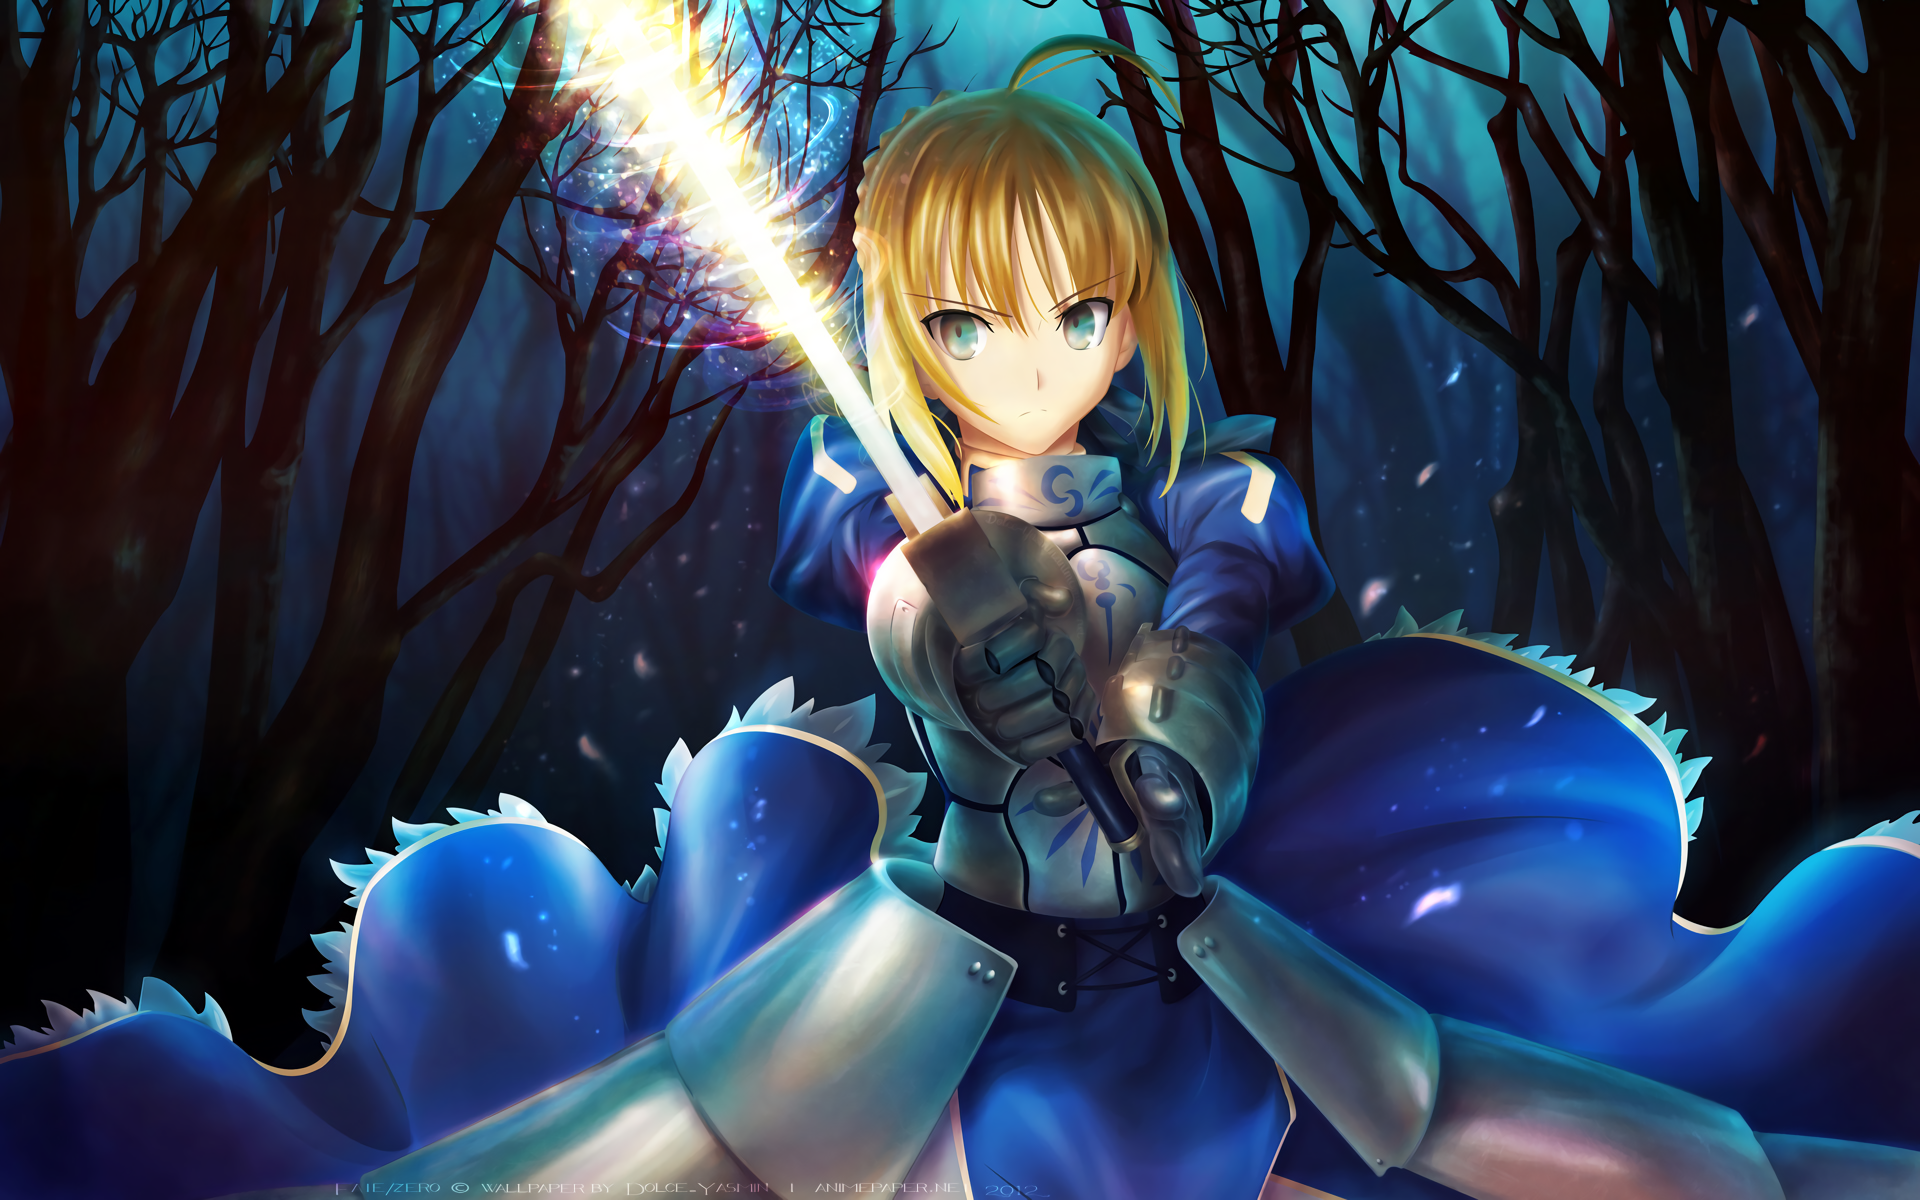 Anime 1920x1200 Saber anime girls anime armor blonde weapon women with swords sword fantasy armor trees fantasy girl fantasy art